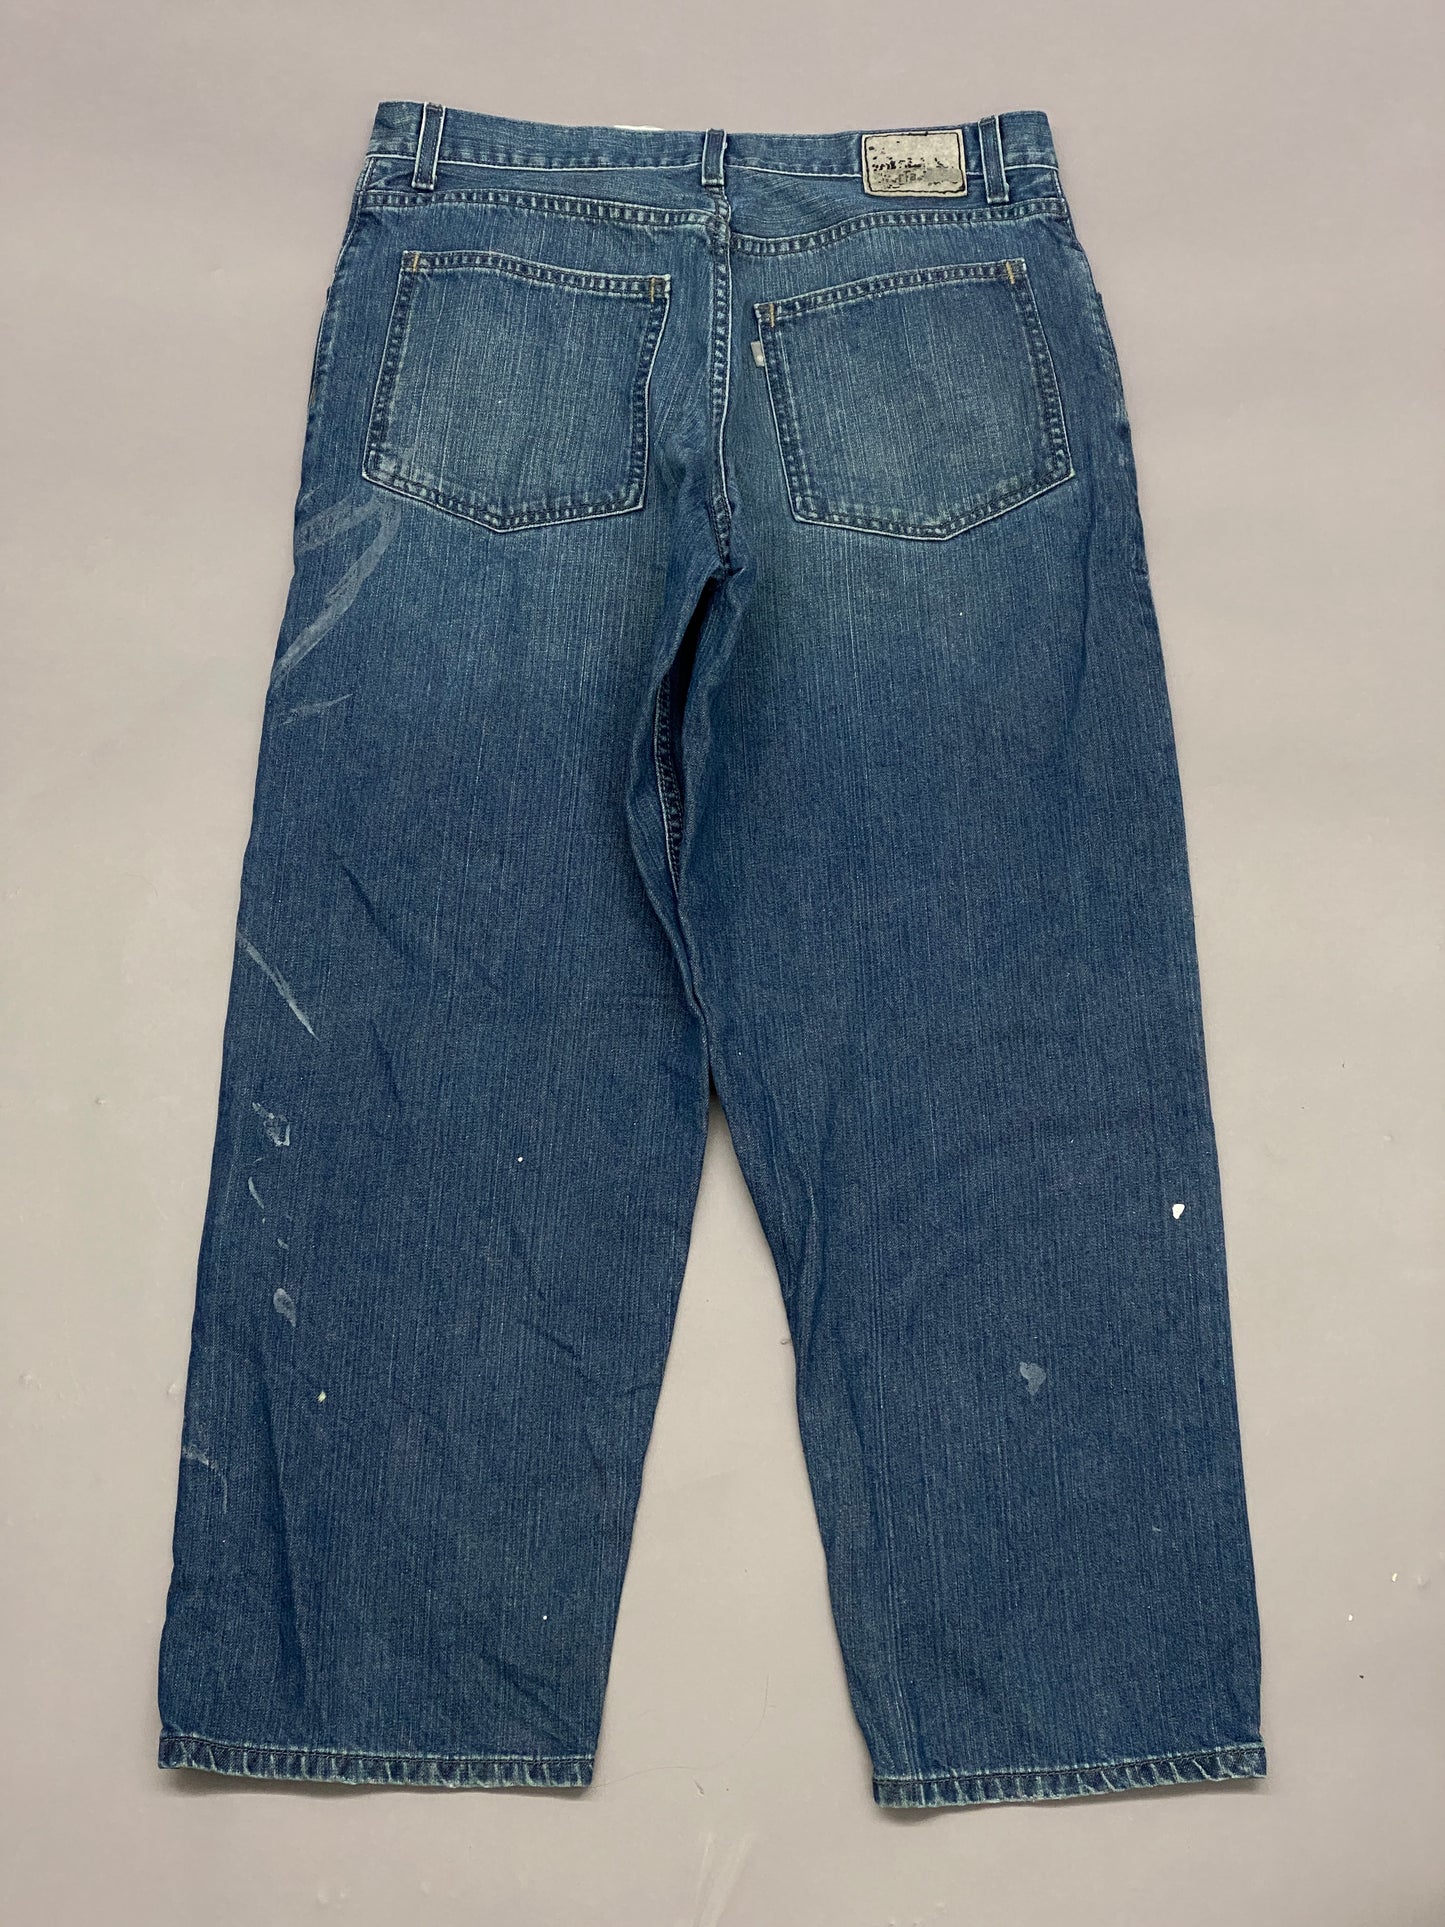 Levis Silver Tab Baggy Vintage Jeans - 34x30